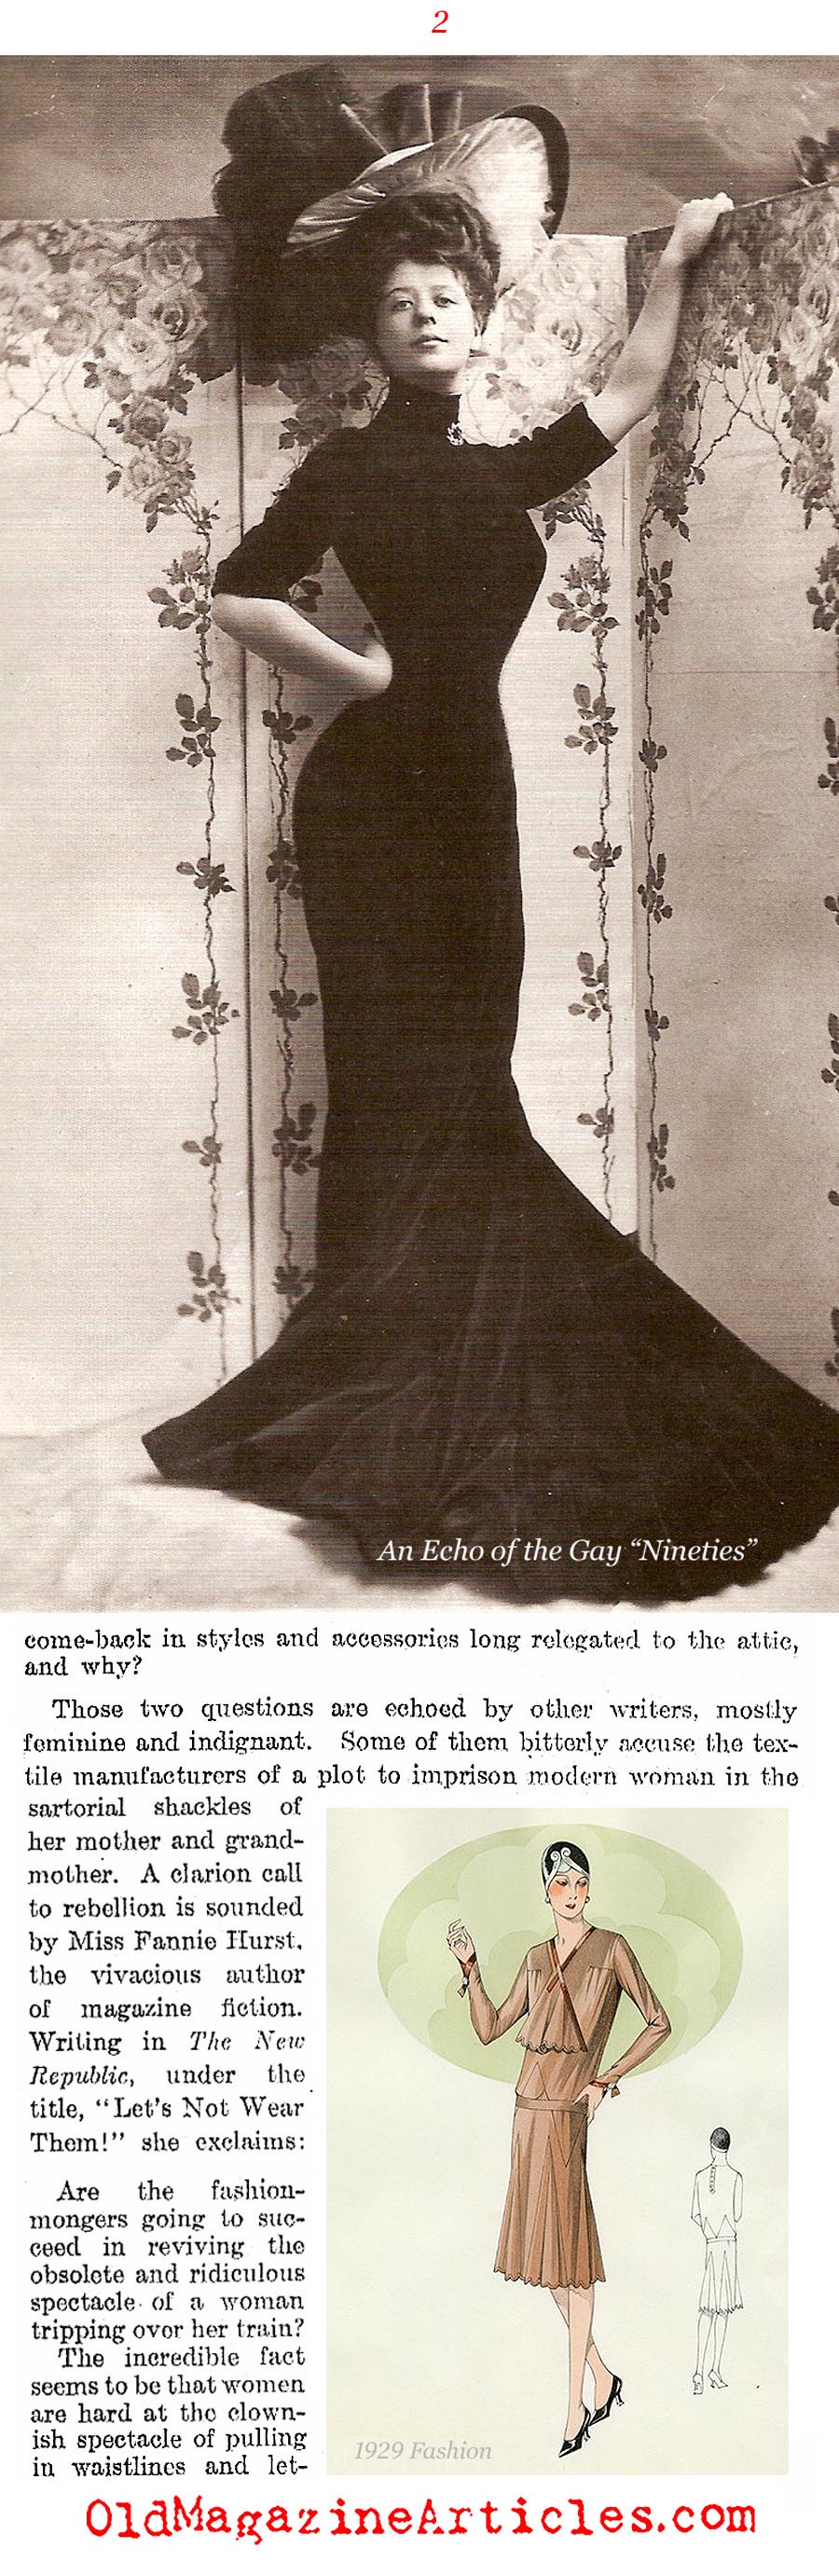 Turning Back The Fashion Revolution (Literary Digest, 1929)